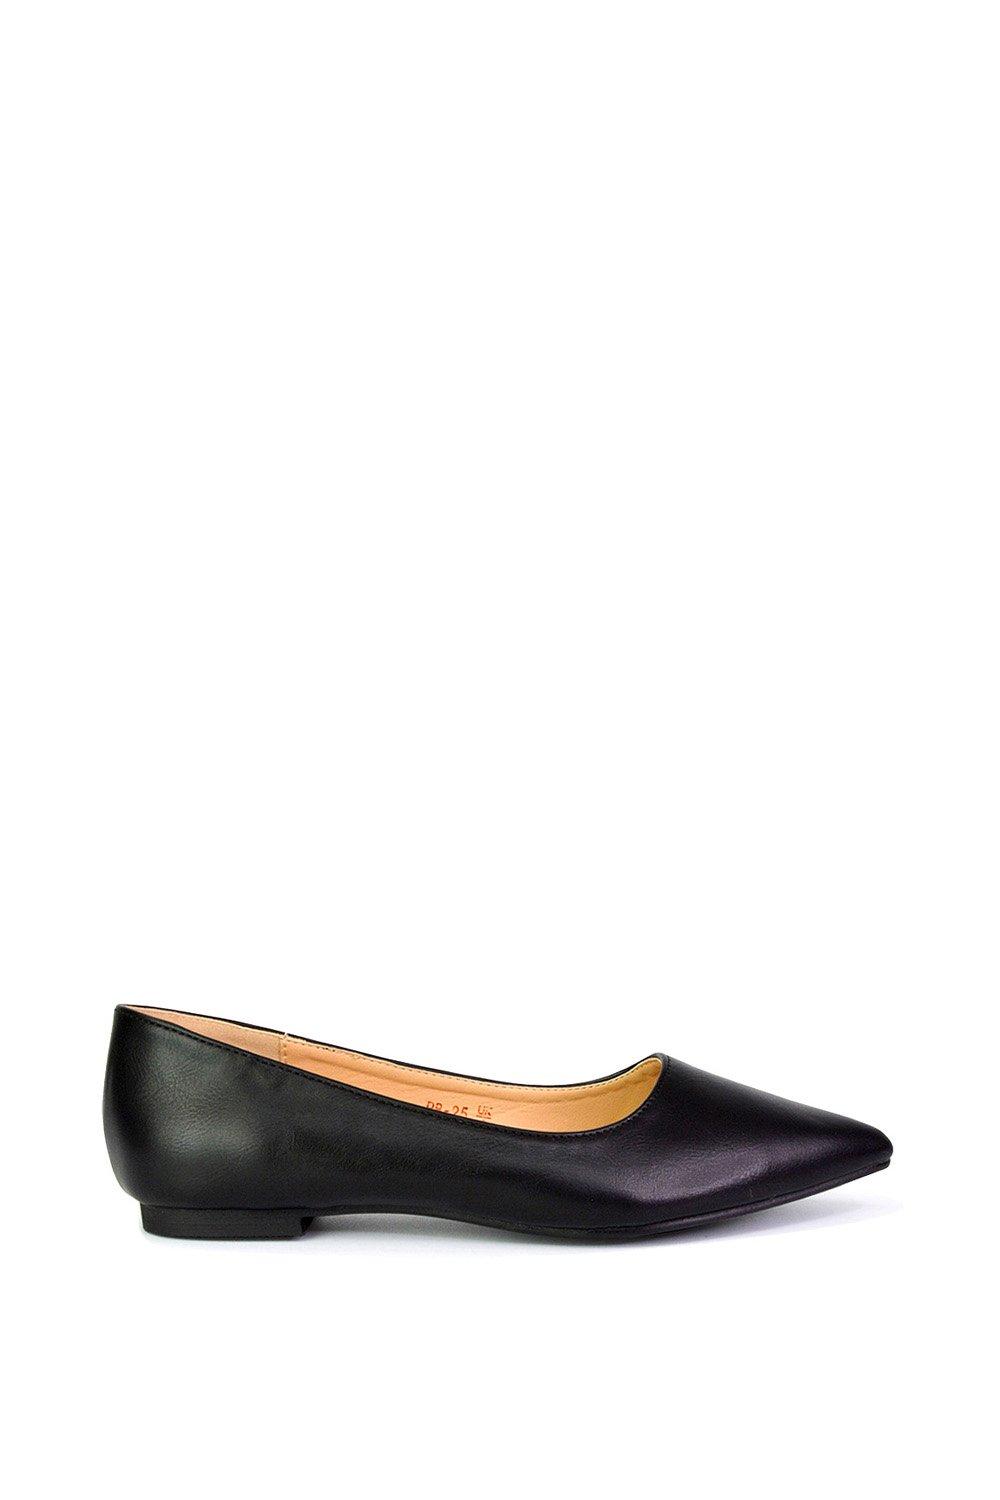 XY London Women's 'Bubbles' Pointed Toe Slip on Flat Ballerina Pump Shoes|Size: 7|black